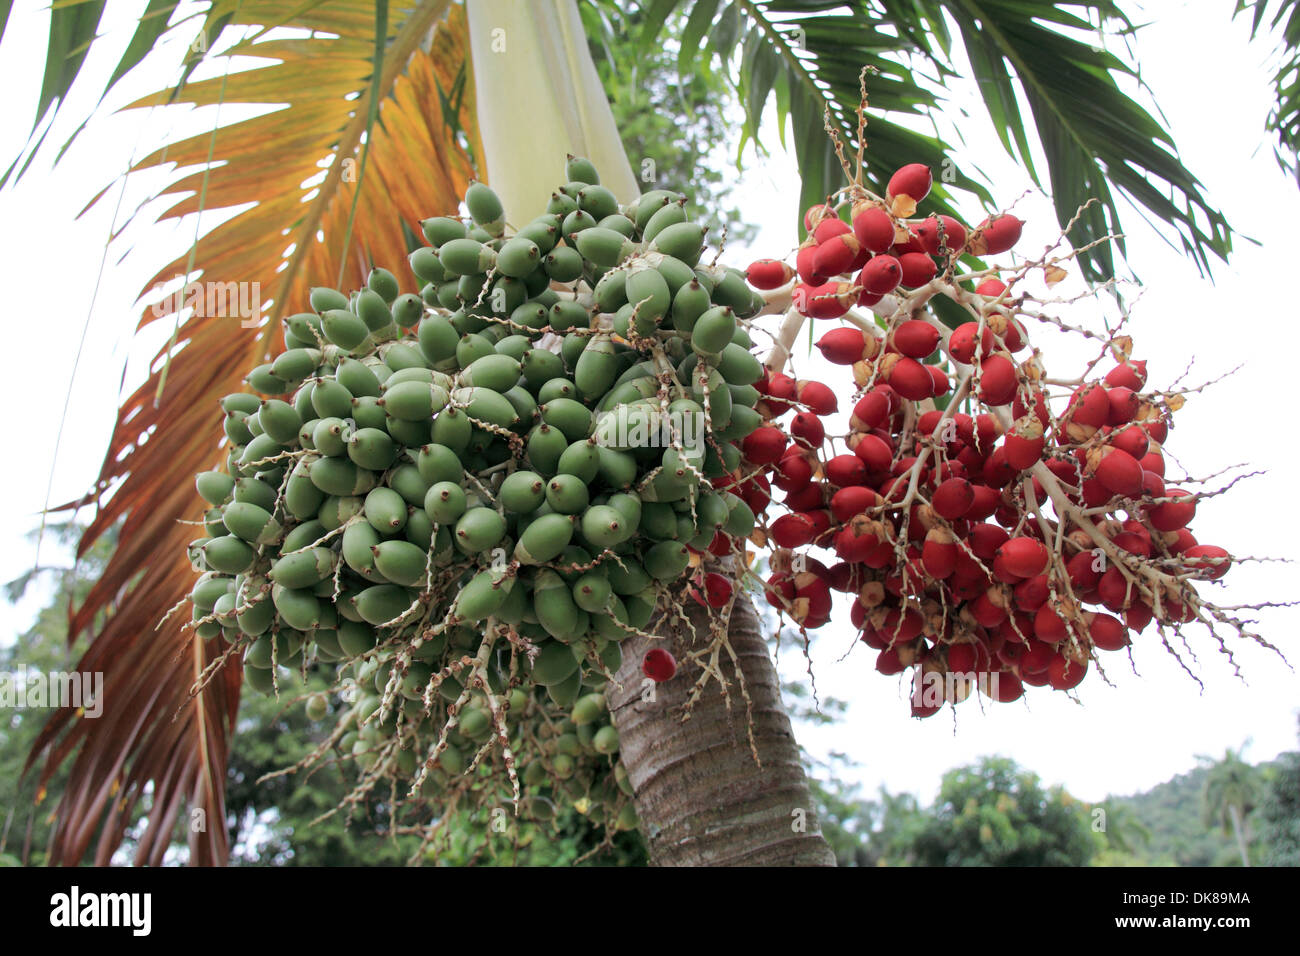 Areca catechu les noix de palme, Vallée de Viñales, province de Pinar del Rio, Cuba, mer des Caraïbes, l'Amérique centrale Banque D'Images